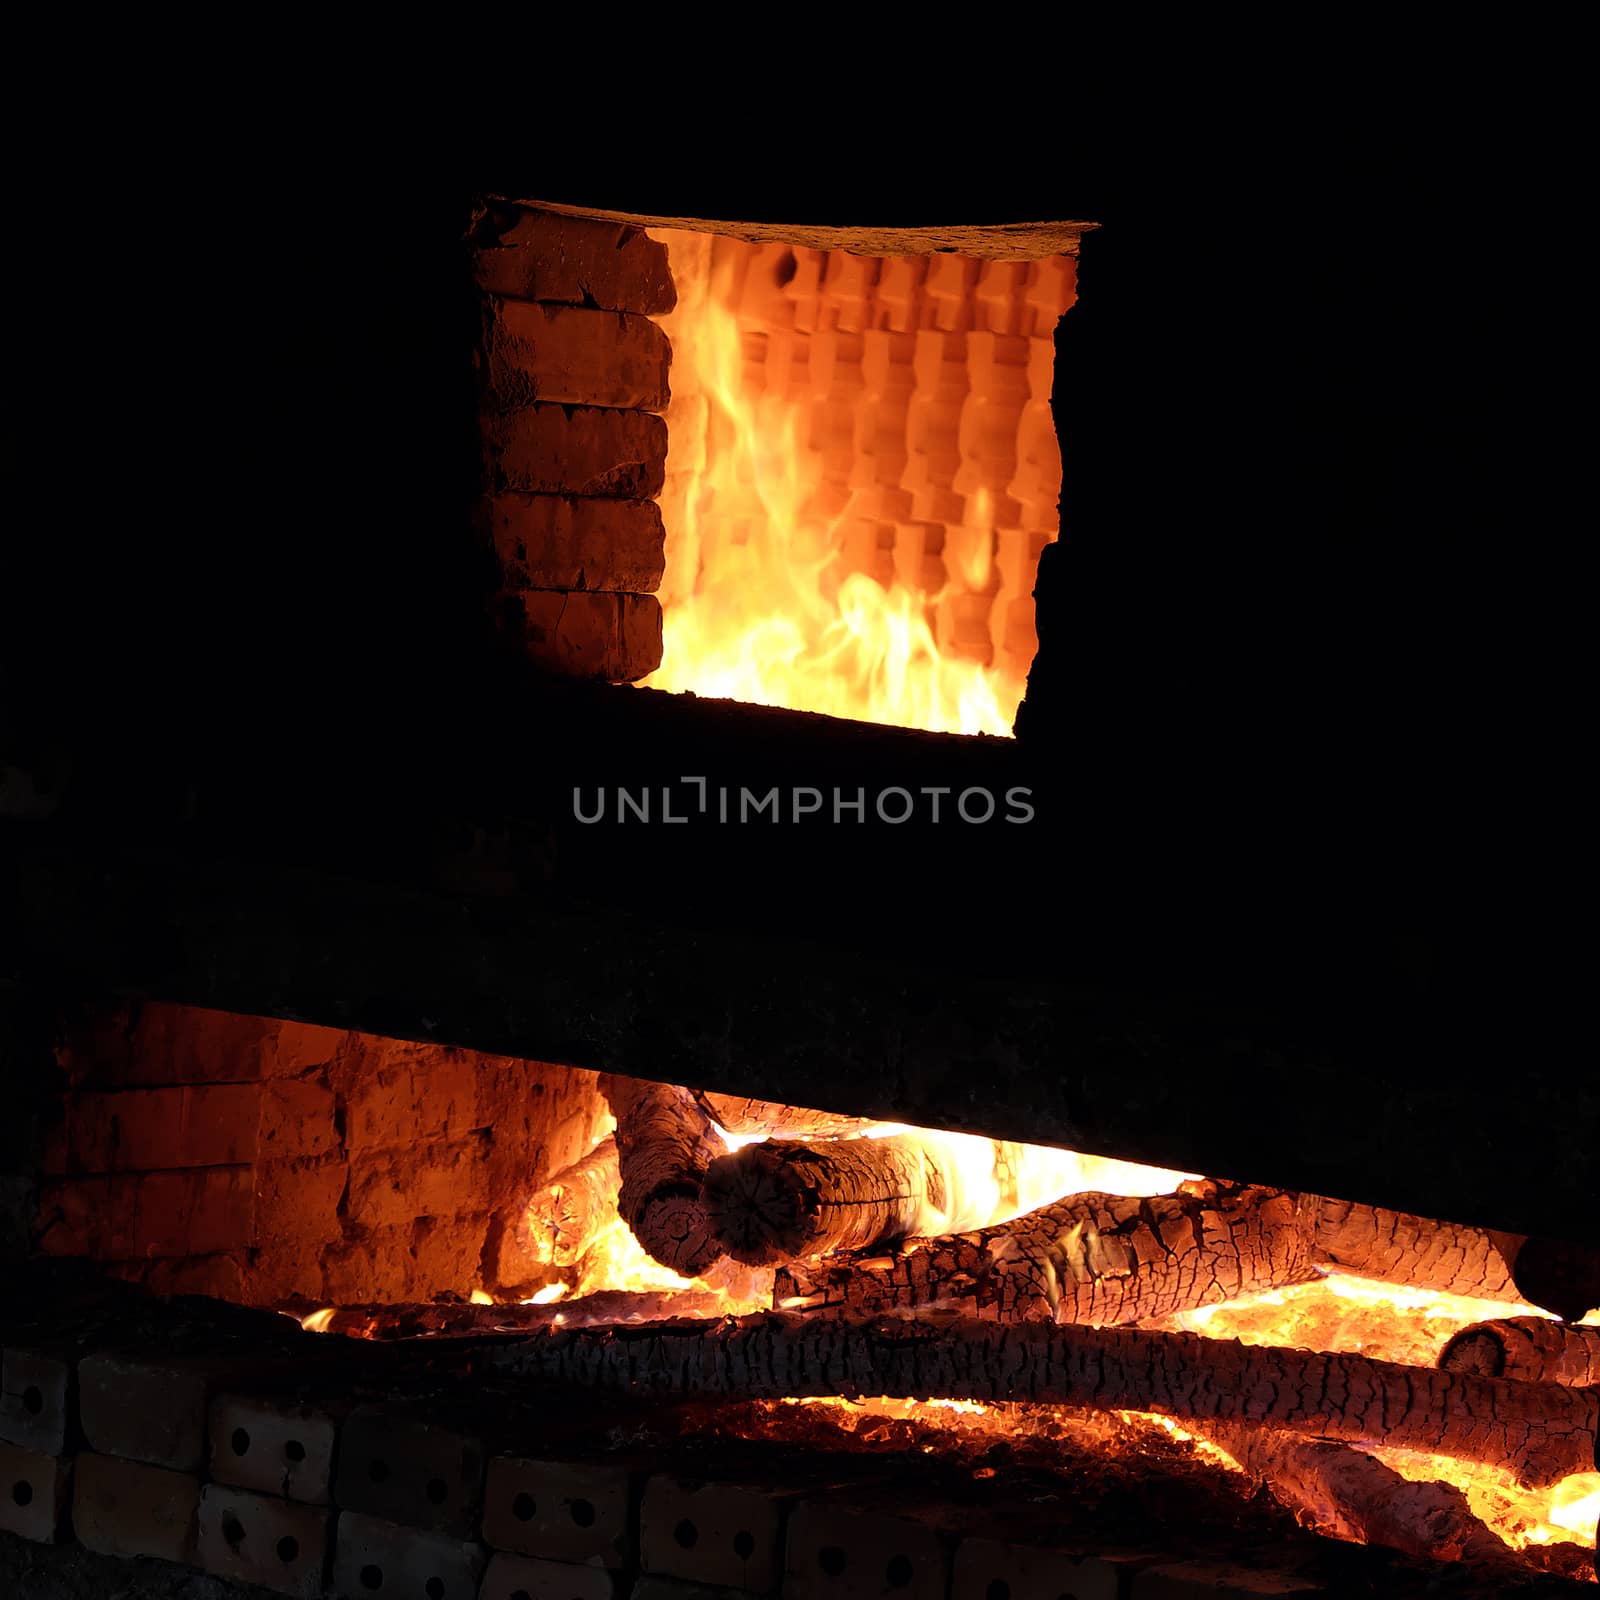 Brickwork, firewood, burning, exhaust fumes by xuanhuongho